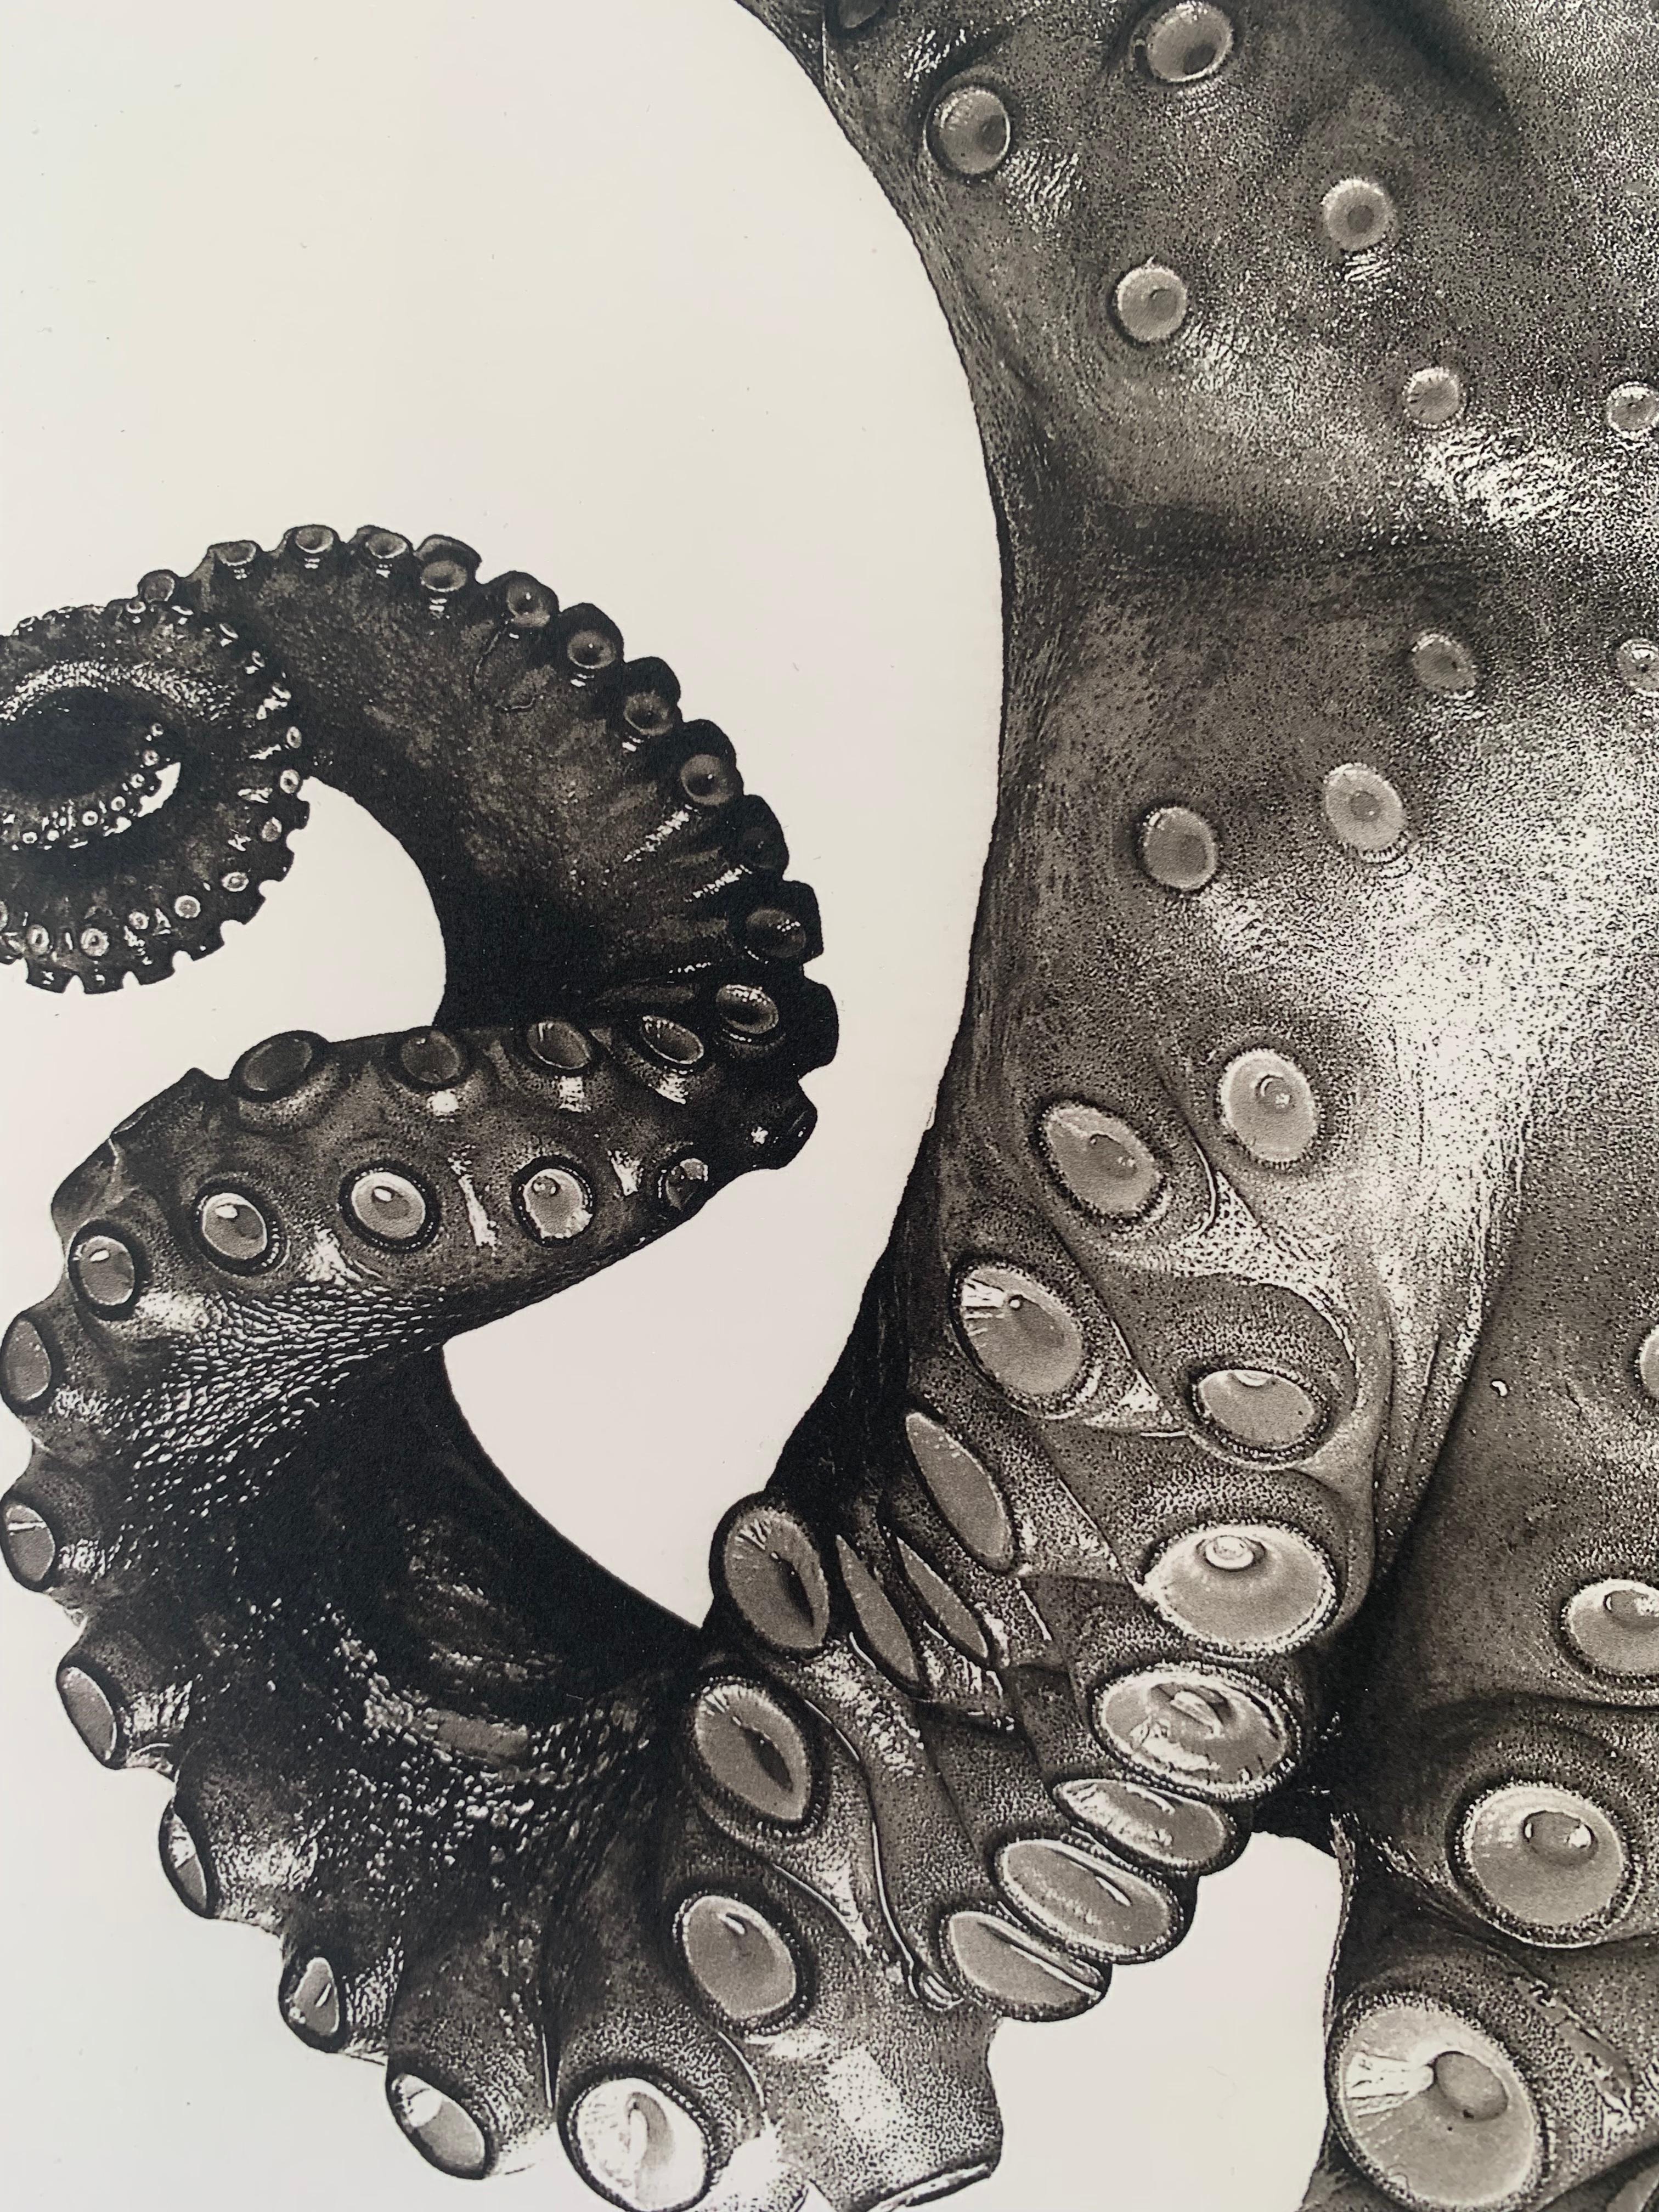 Octopus Vulgaris ( Special Edition) - Contemporary Photograph by Jan C. Schlegel